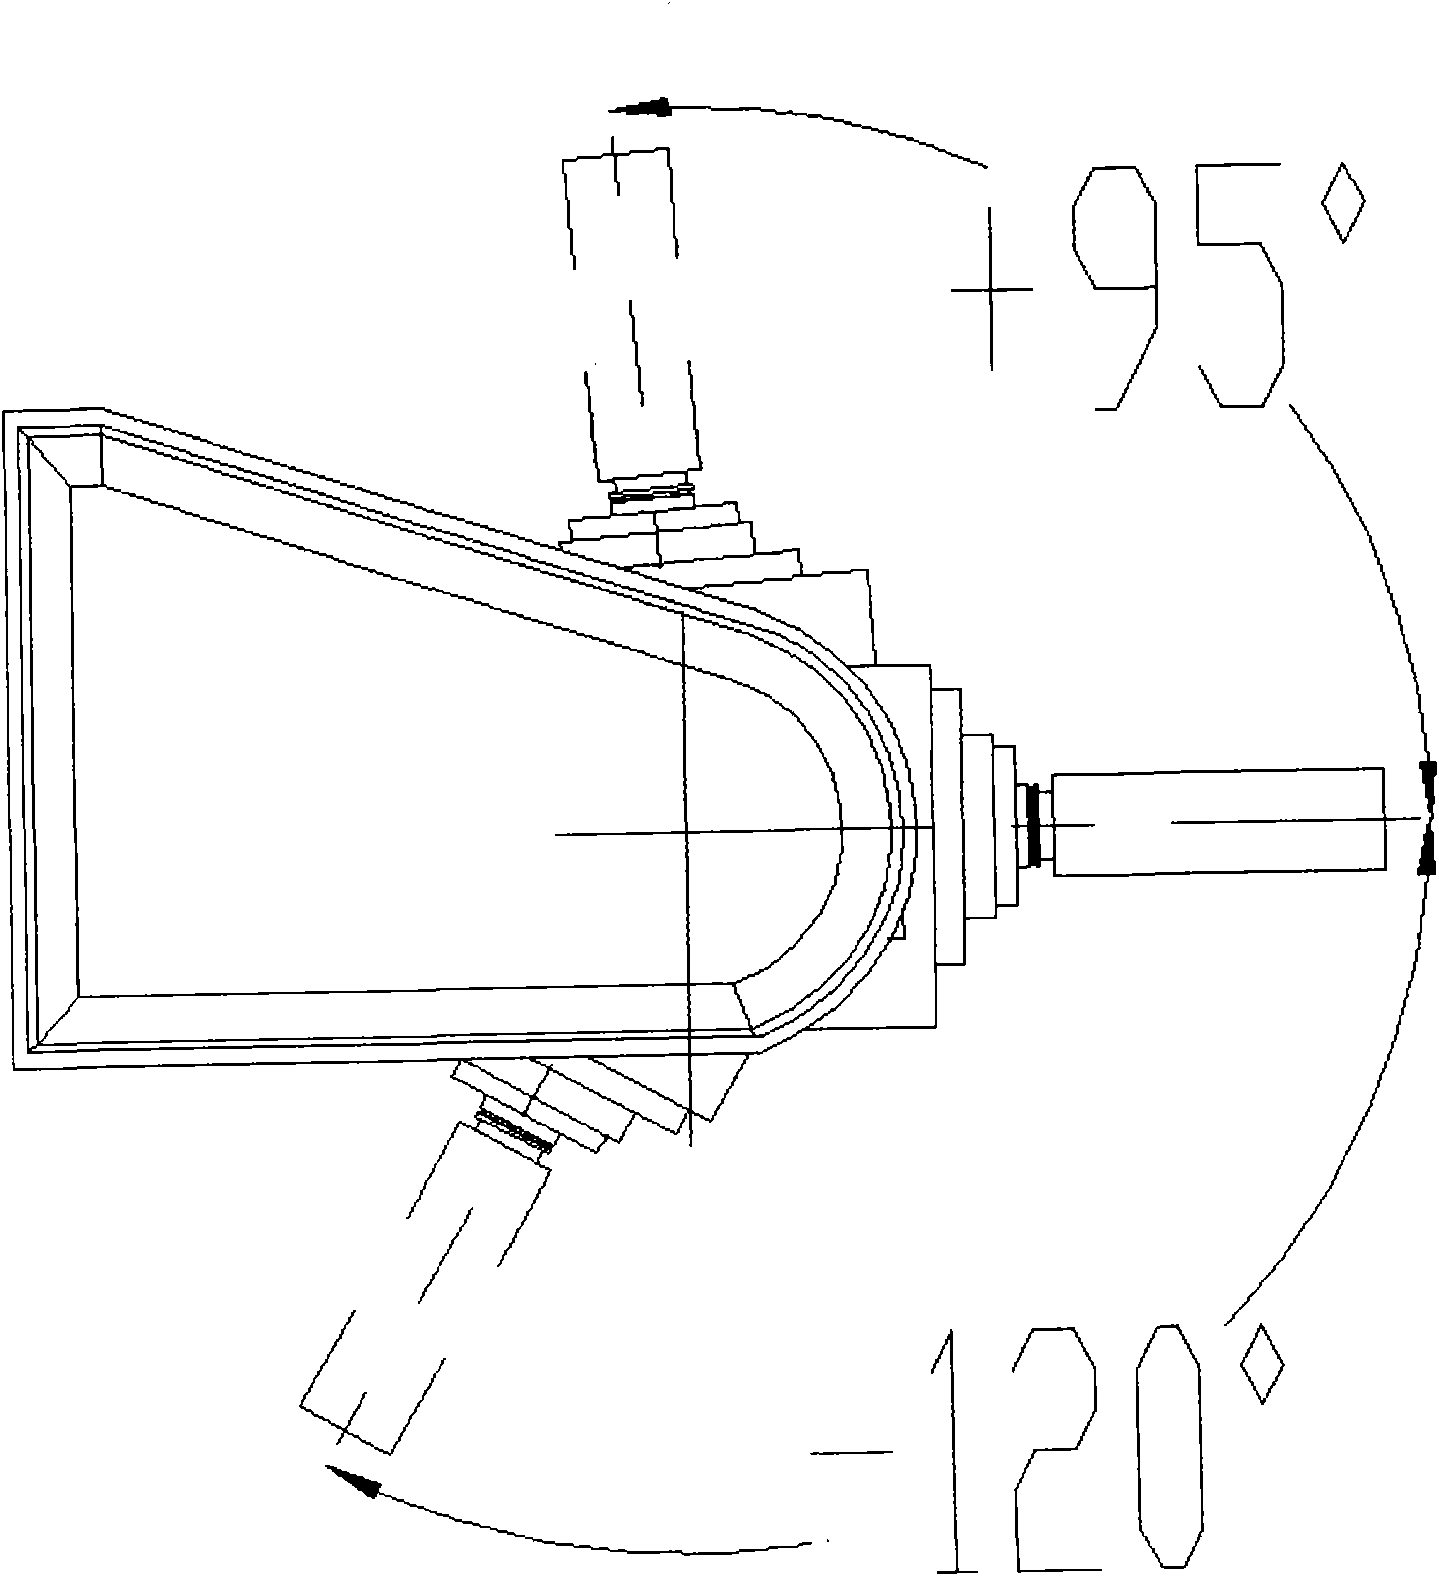 Five-axis linkage horizontal machining center machine tool